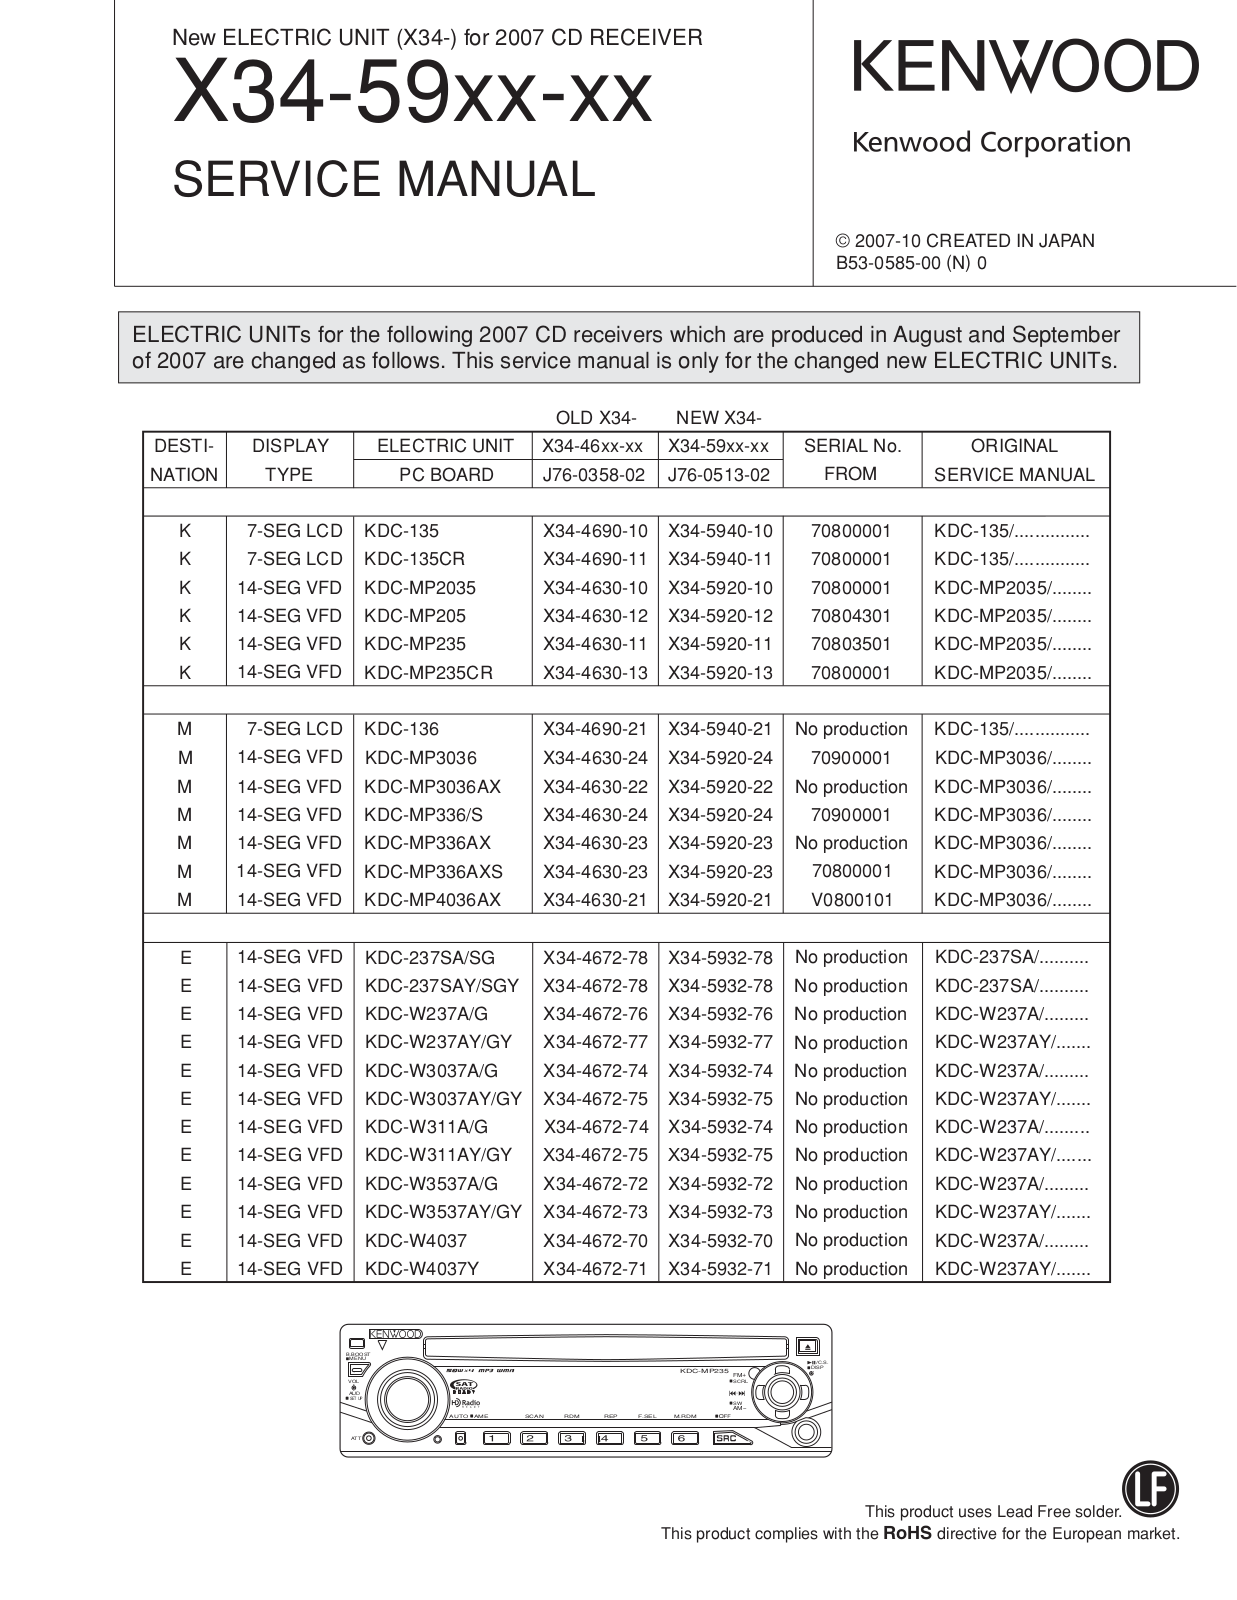 KENWOOD KDC-135, KDC-MP3036, KDC-MP336, KDC-MP336AX, KDC-MP4036AX Service Manual